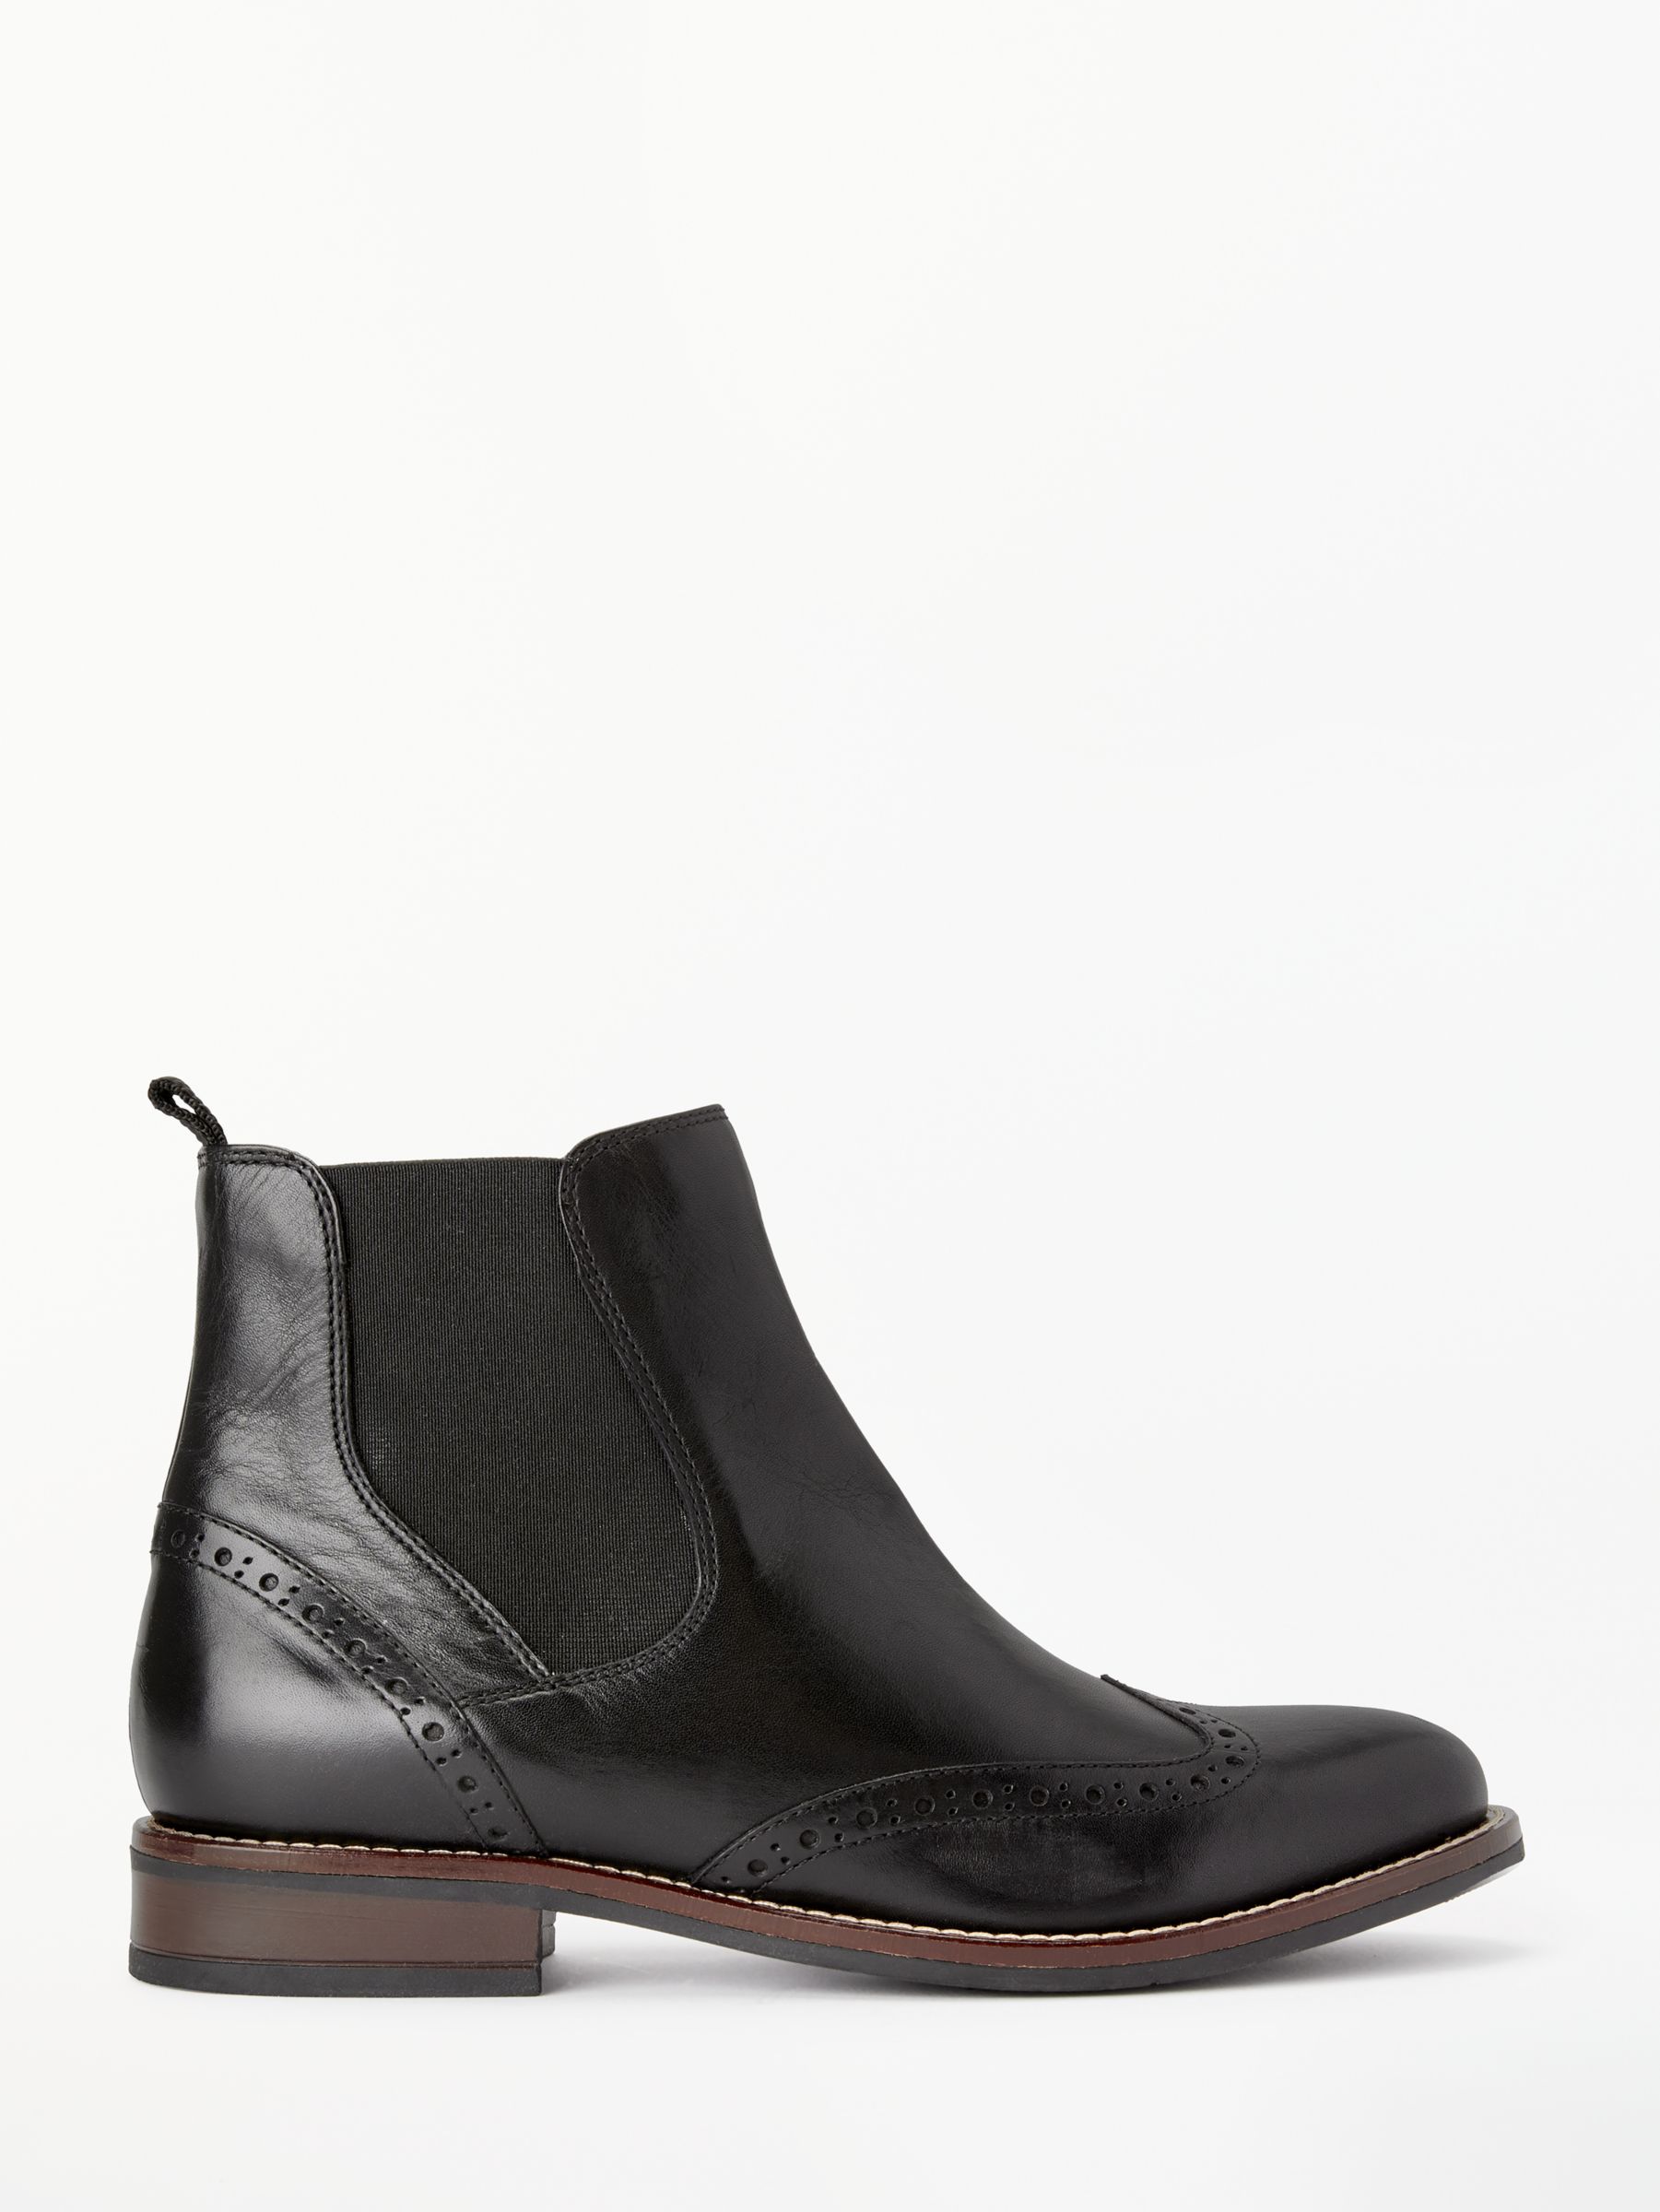 John Lewis Phoebe Brogue Detail Chelsea Boots, Black Leather, 3